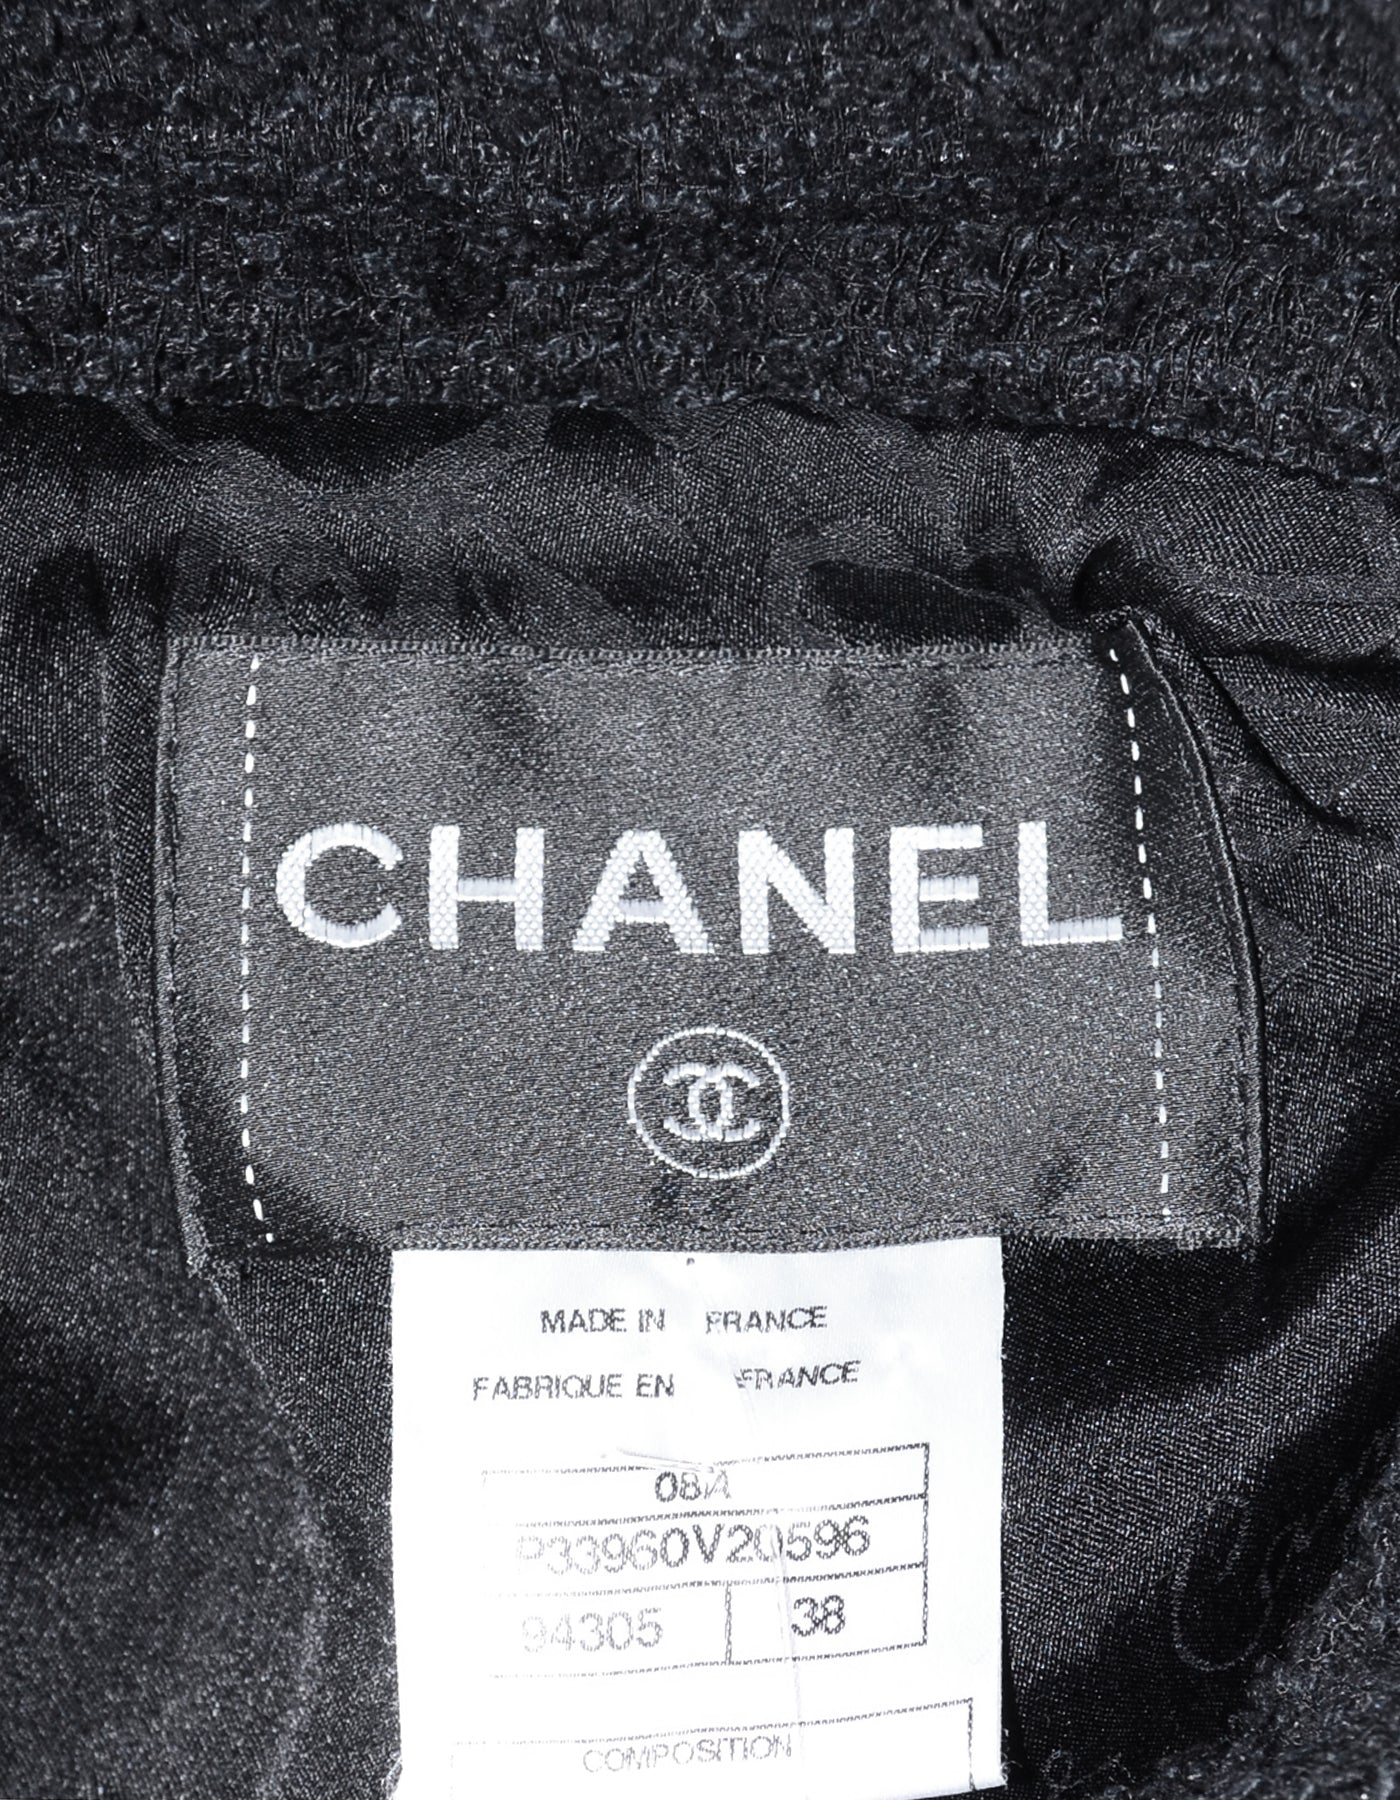 Chanel Black Wool Boucle Vest w/ Fringe sz 38